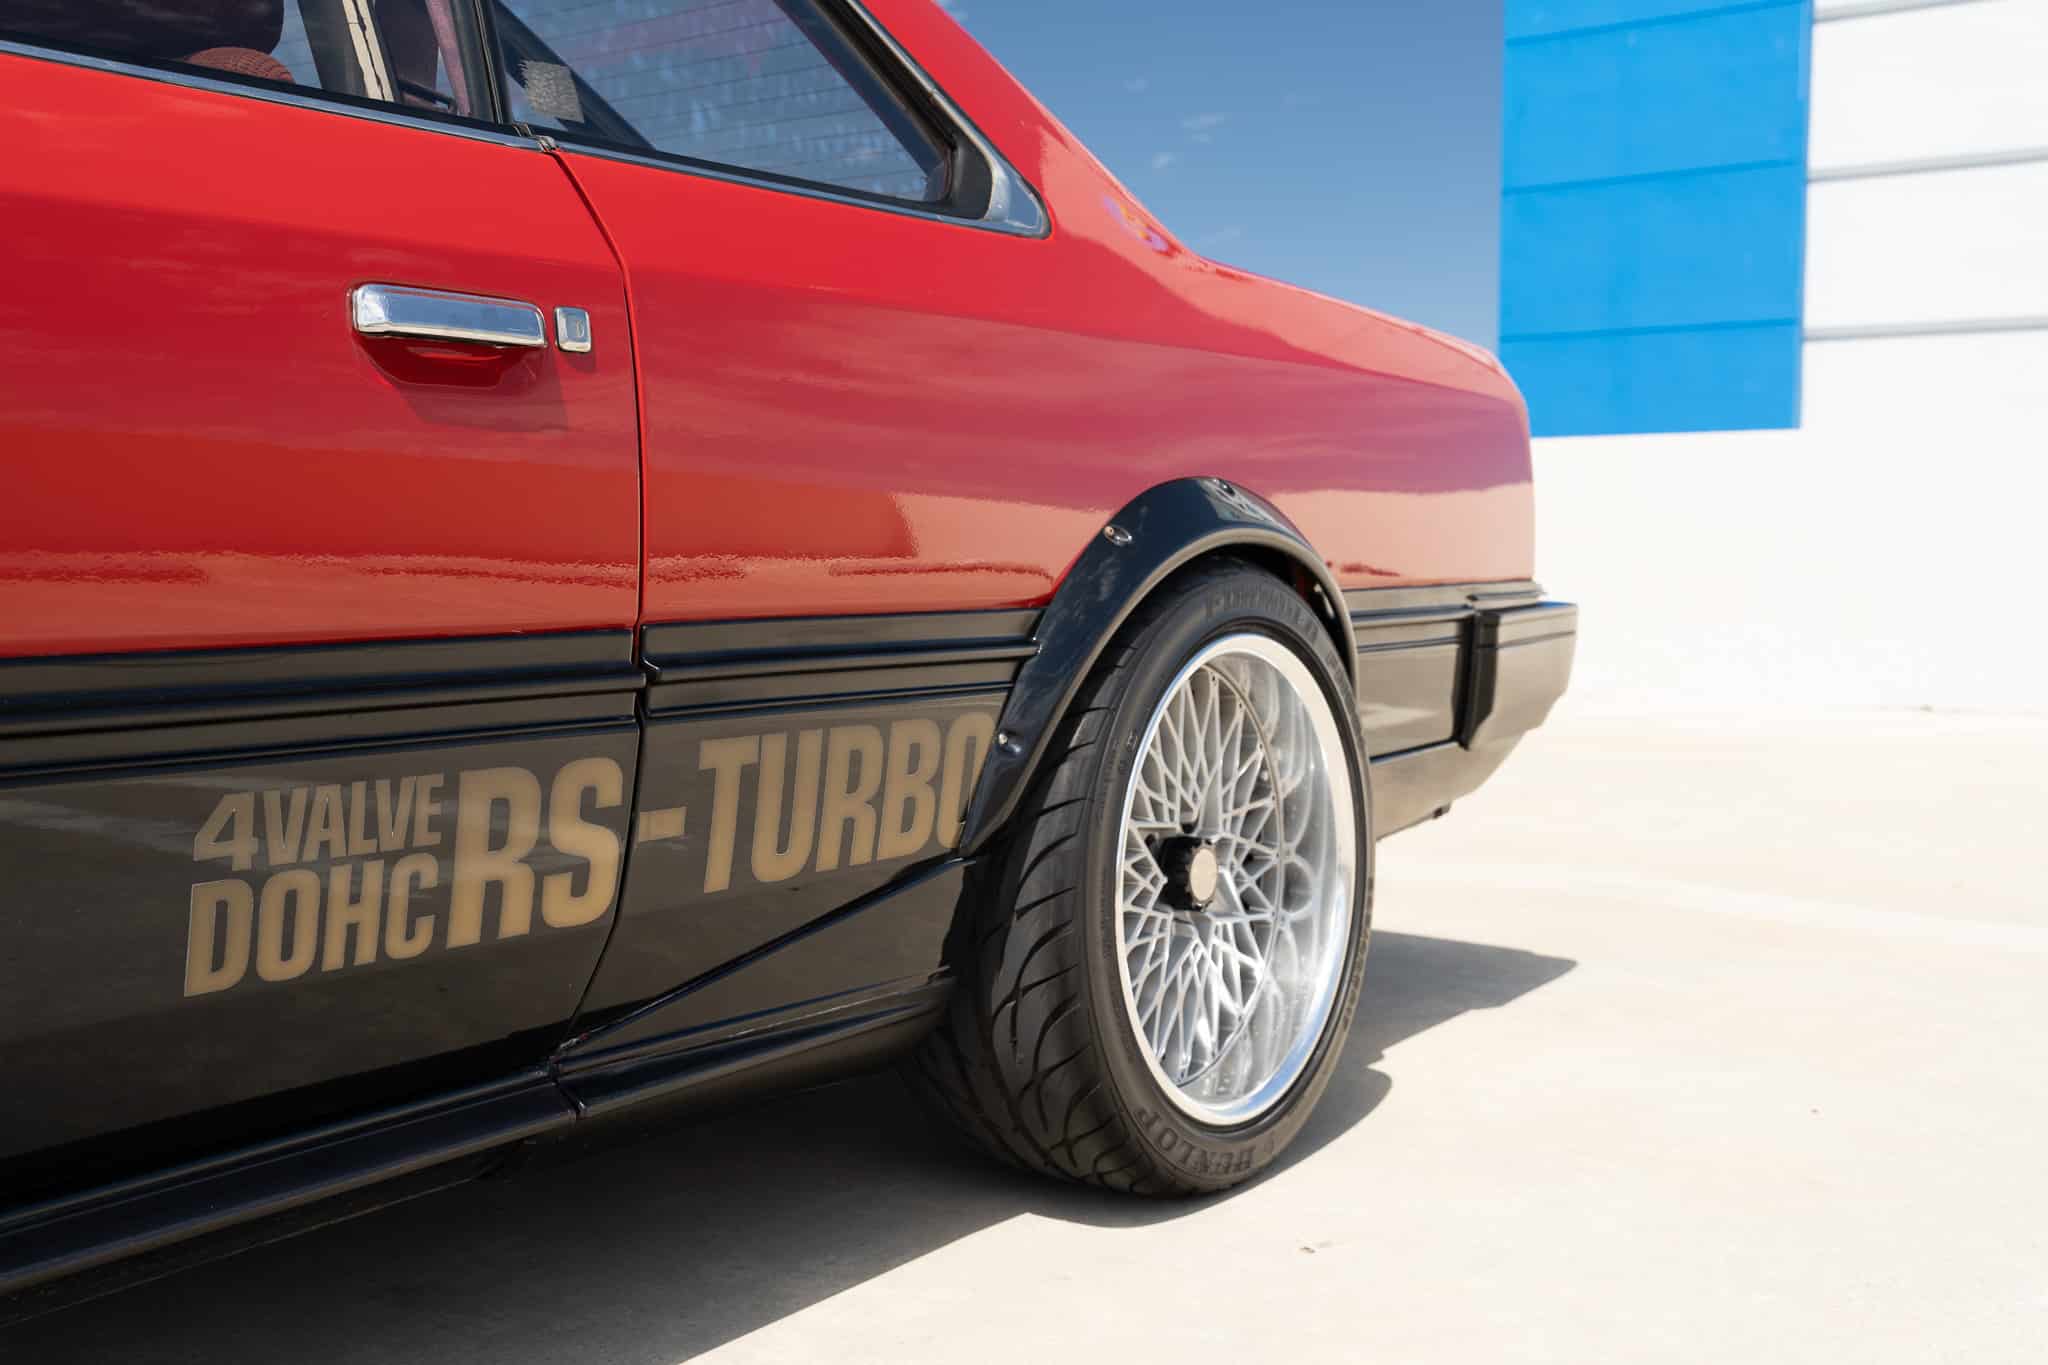 1984 Nissan Skyline RS-X Turbo (DR30) |  L28 Swap | SSR Formula Mesh |